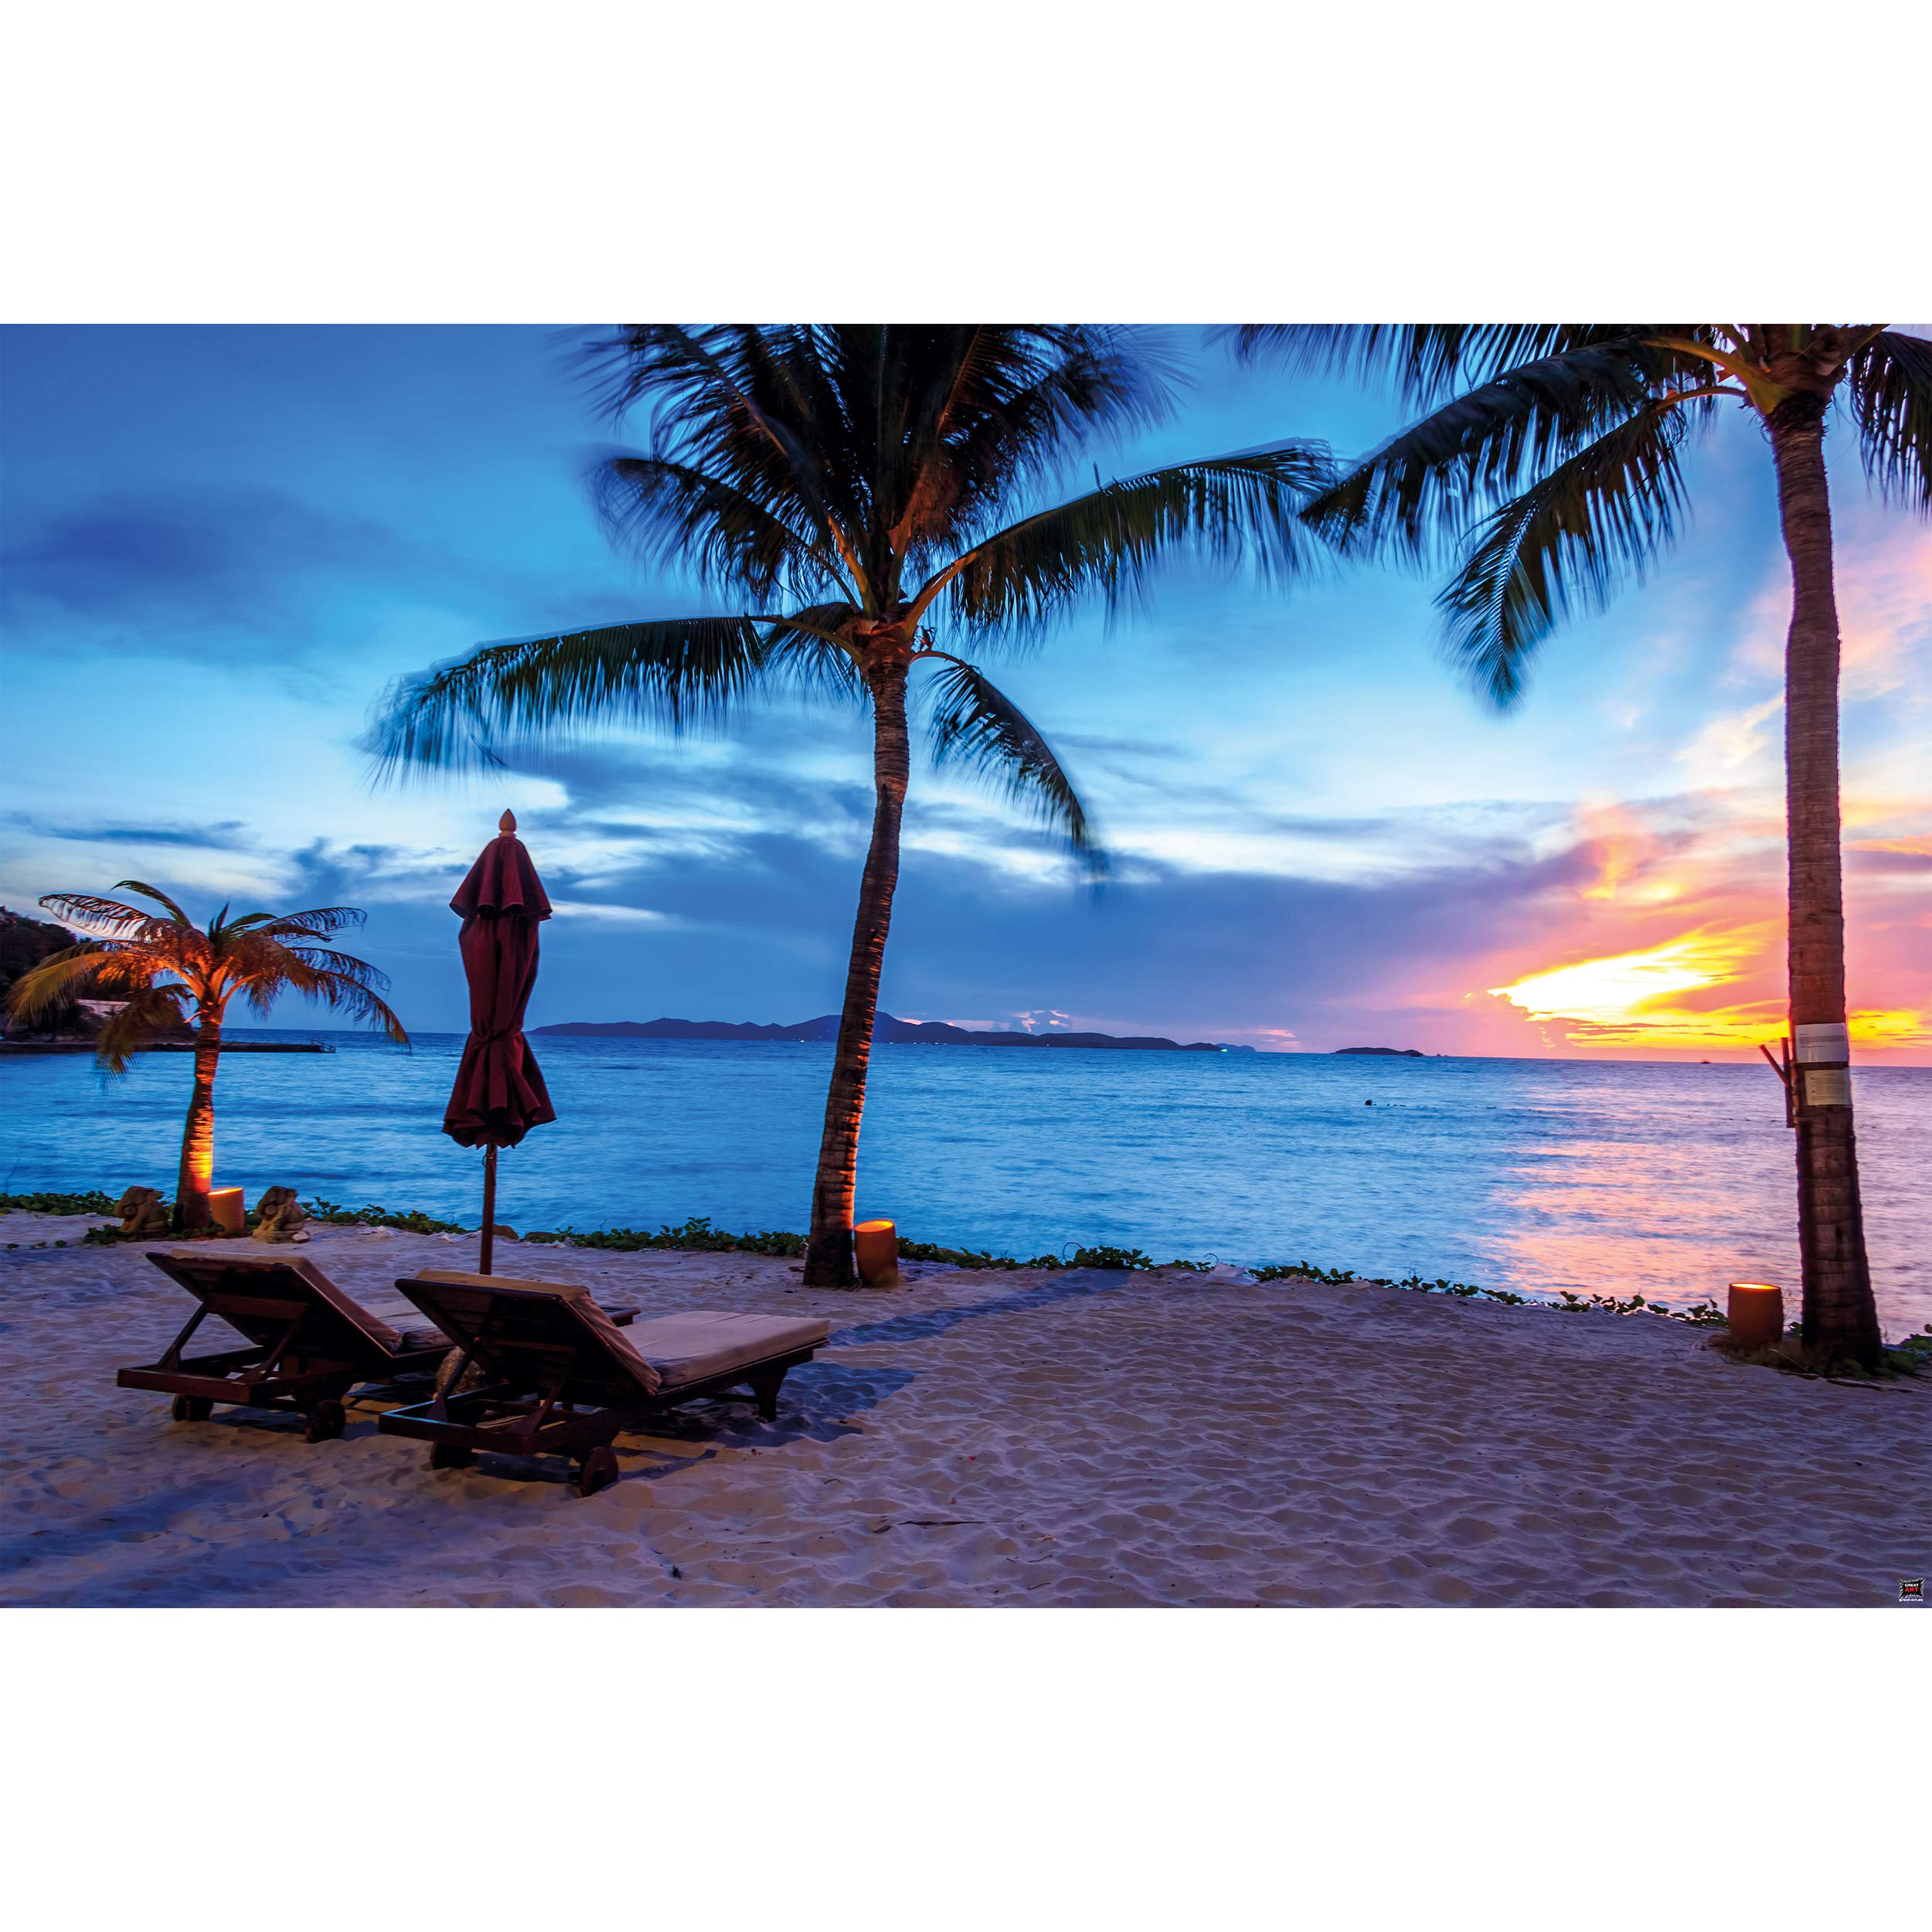 Bahamas Sunsets Wallpapers